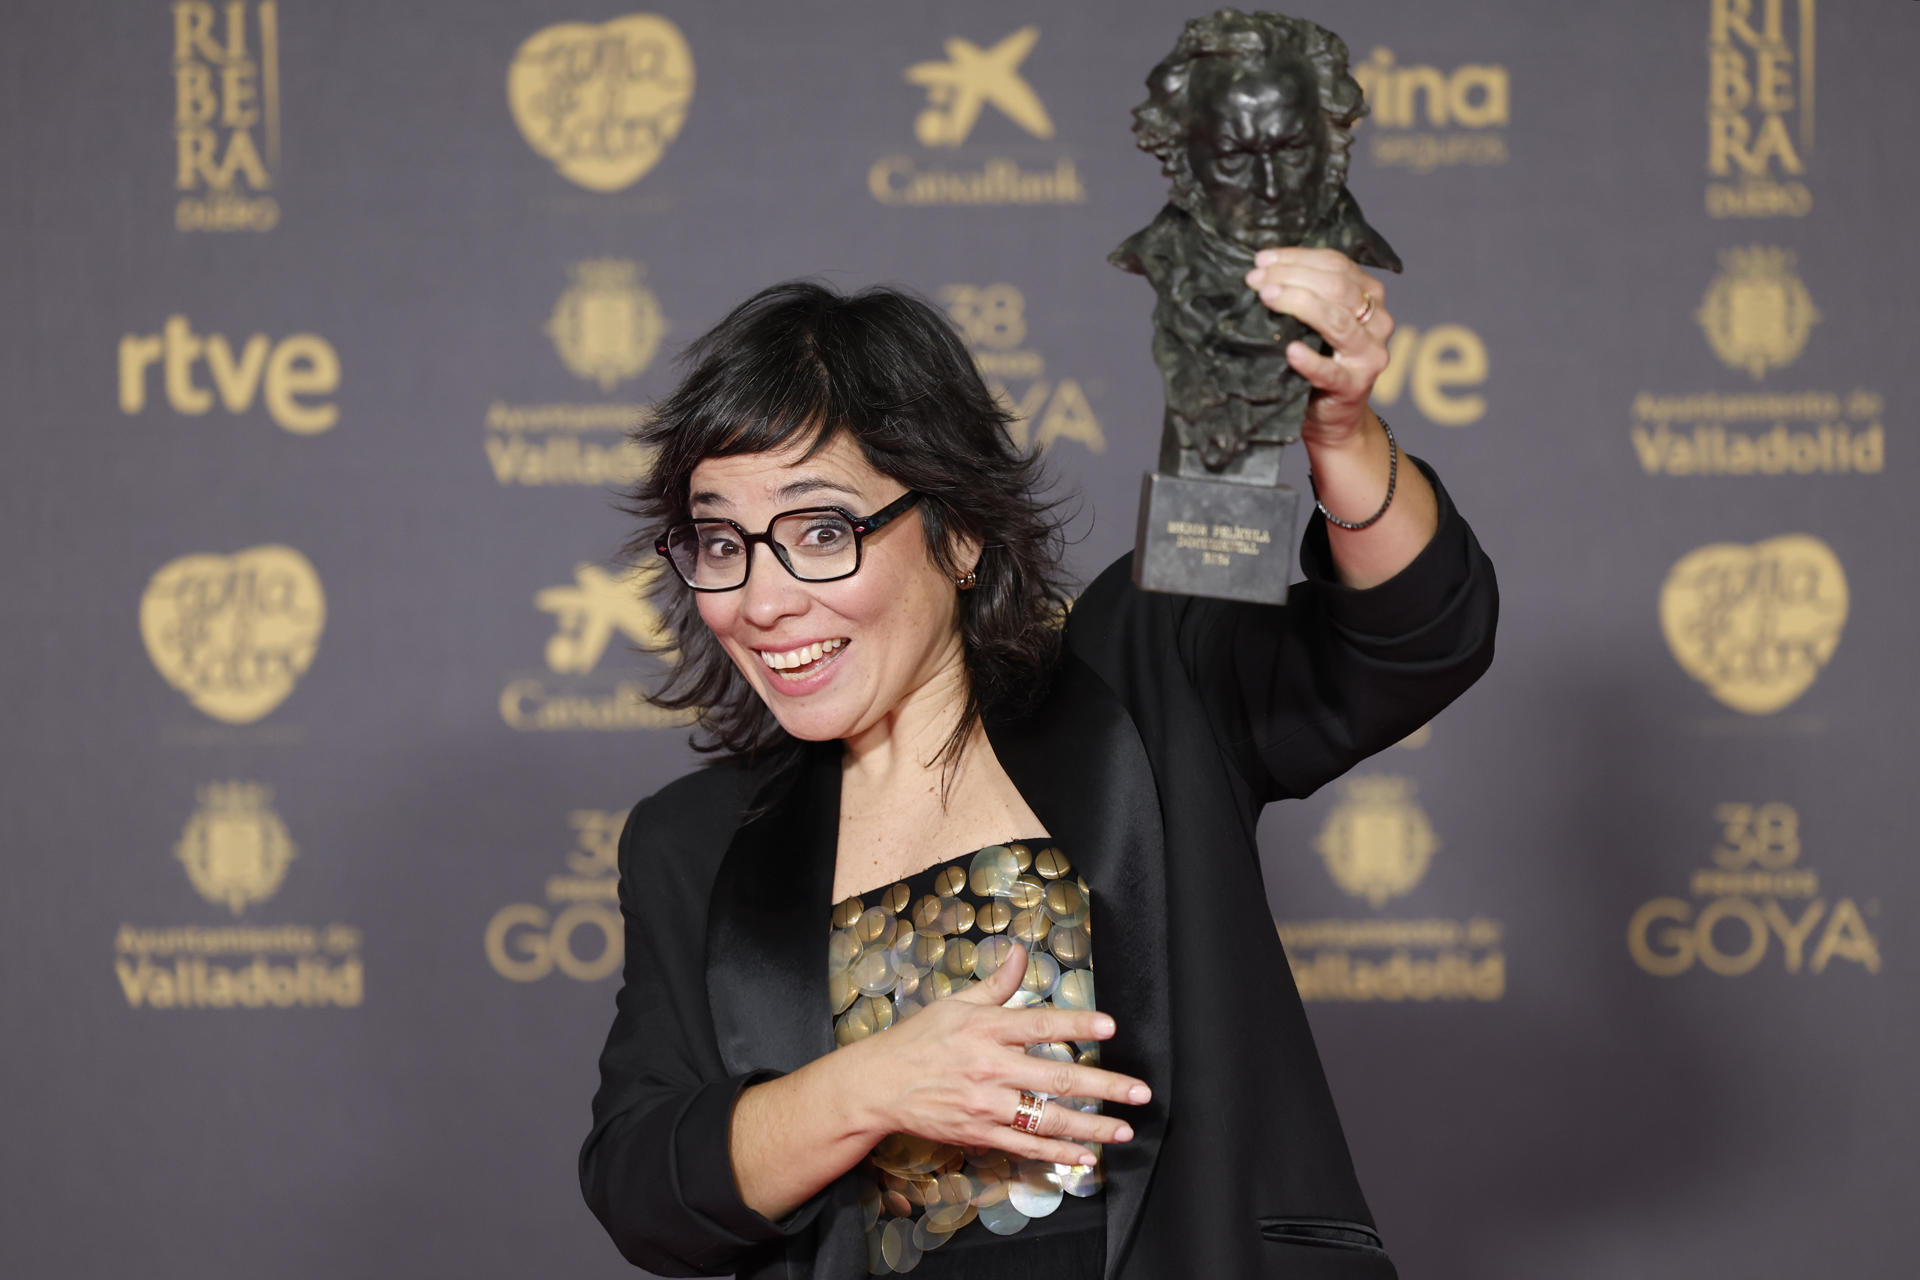 La directora venezolana Claudia Pinto ganó premio Goya al mejor documental